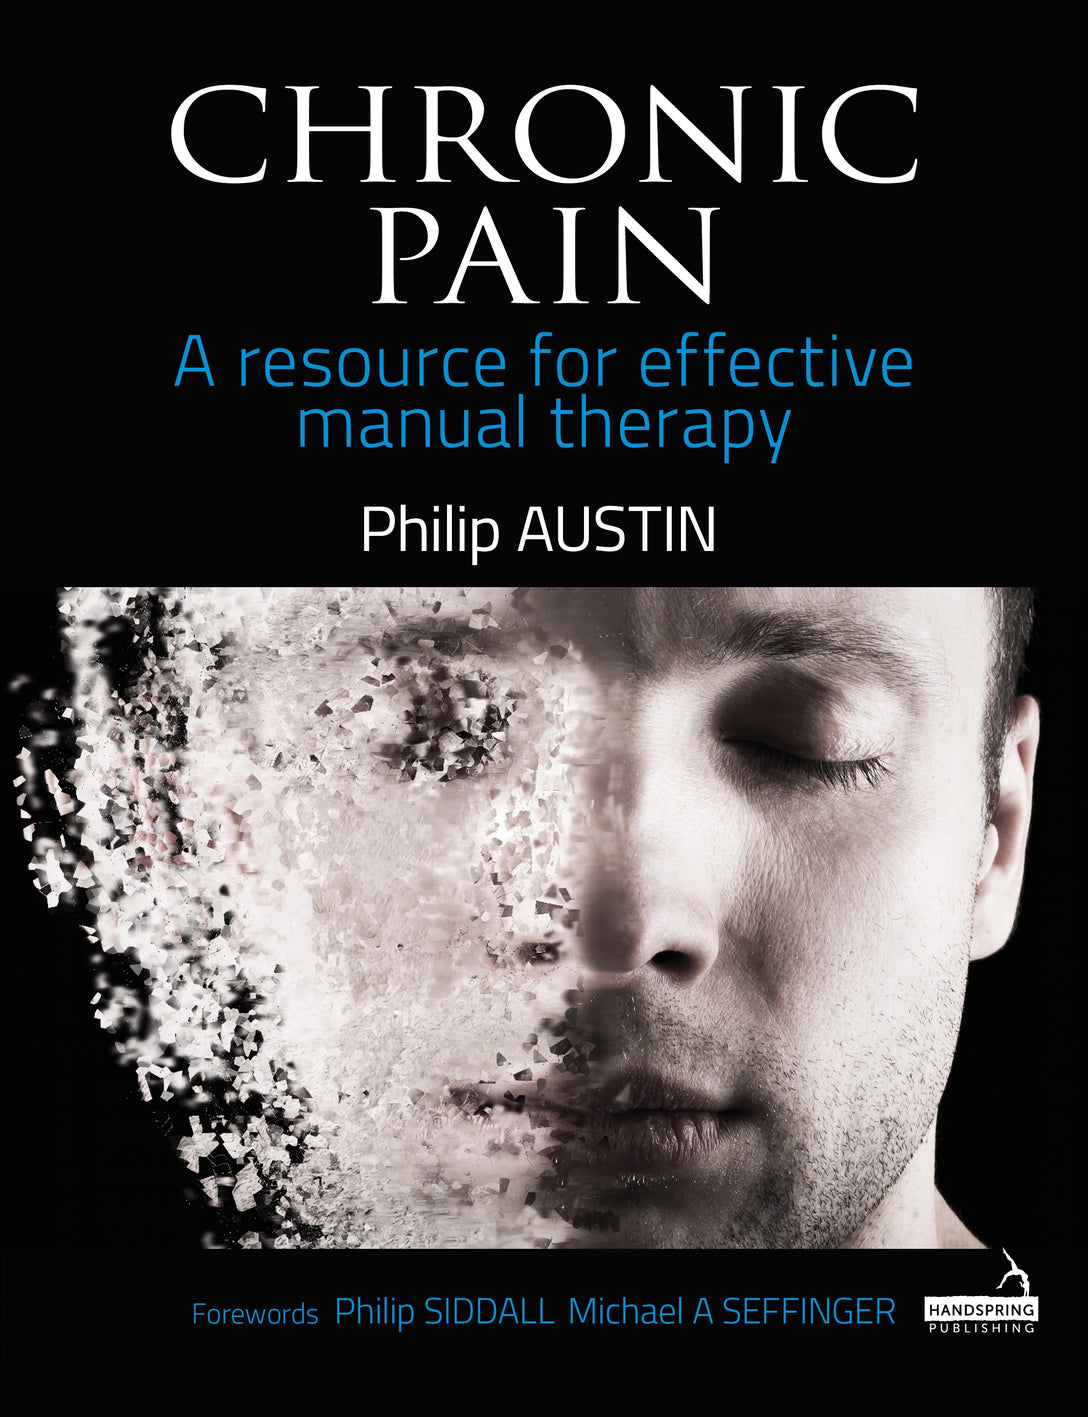 Chronic Pain by Philip Austin